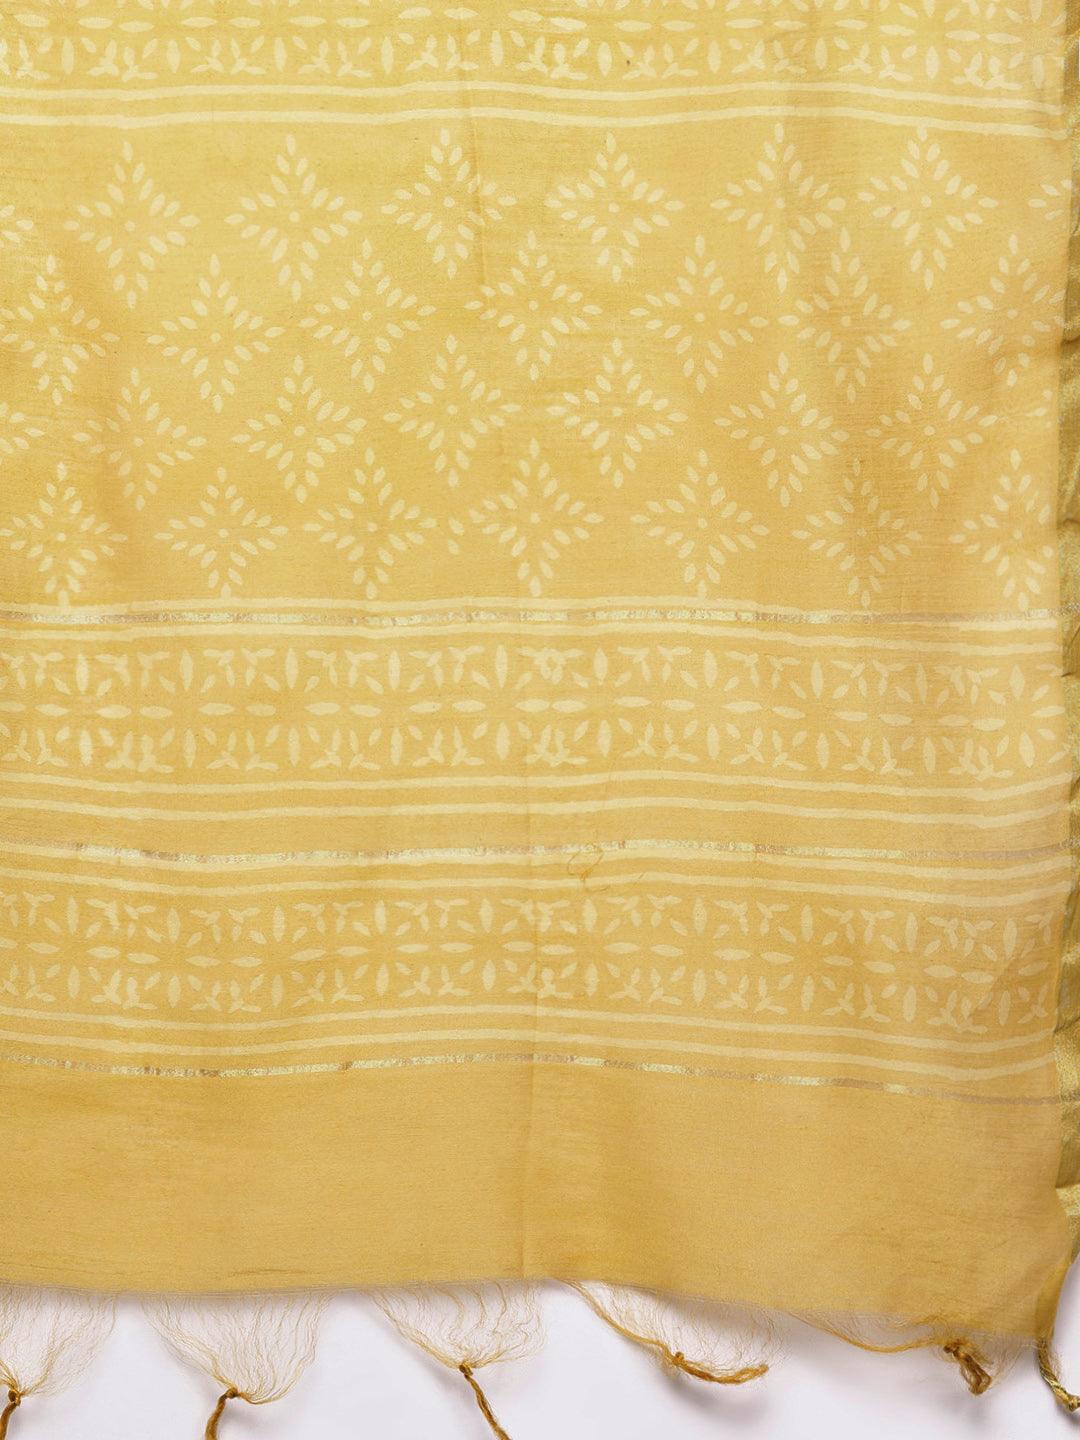 Mustard Printed Chanderi Silk Straight Kurta With Dupatta